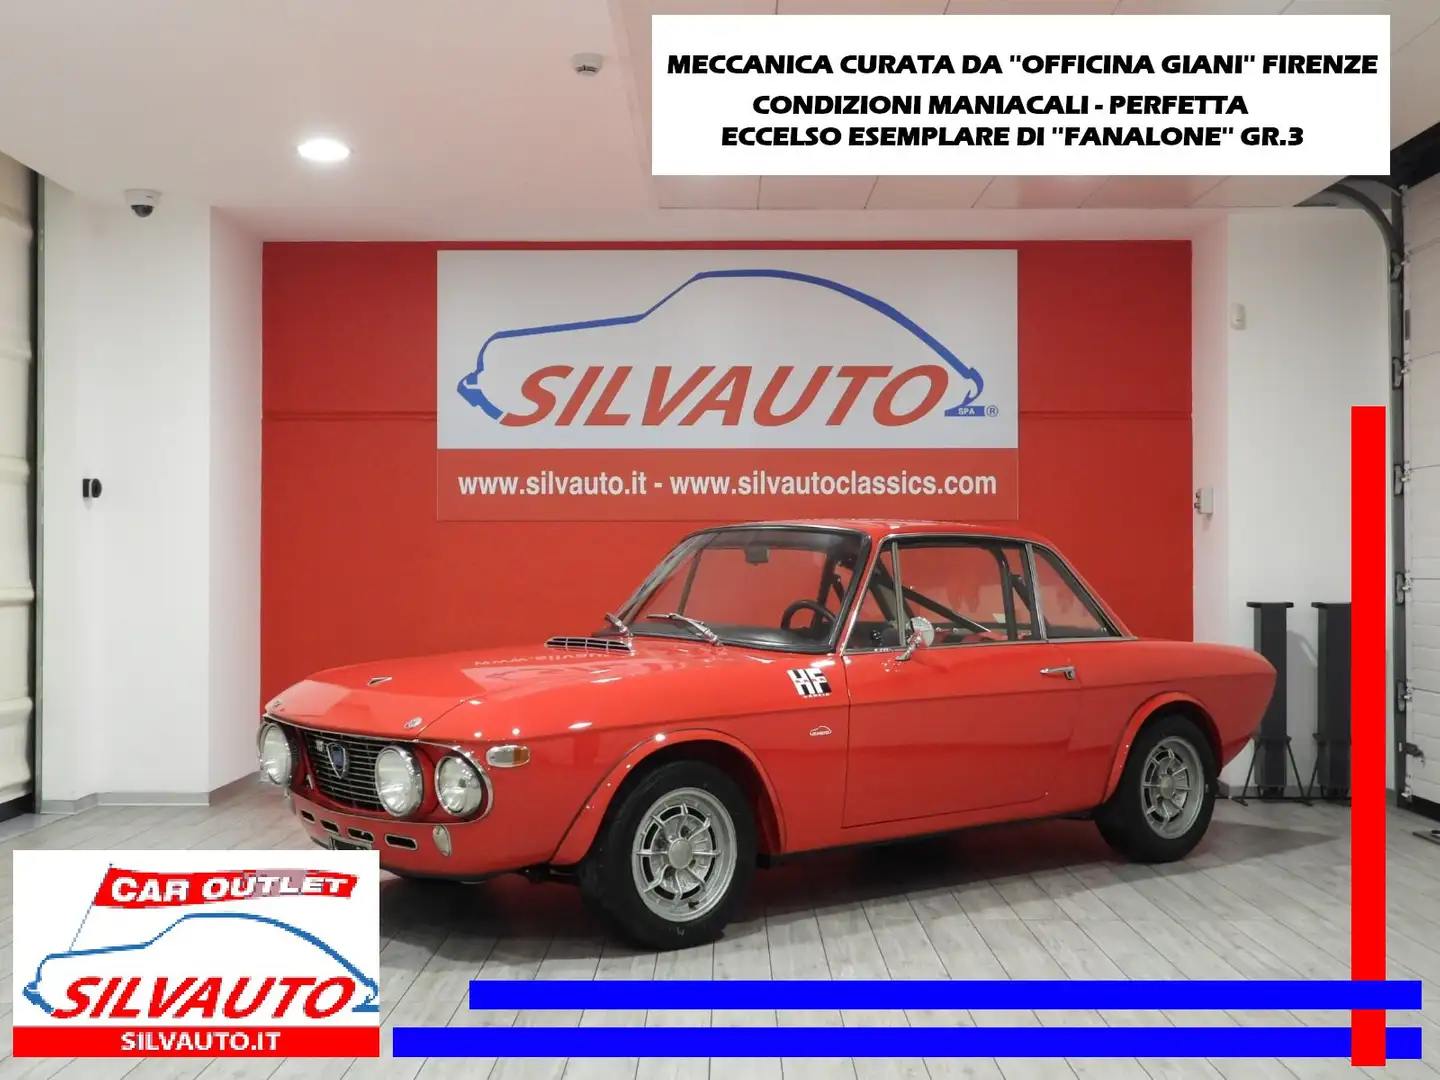 Lancia Fulvia RALLYE 1.6 HF T. 818.540 ”FANALONE” GR.3(1970) crvena - 1